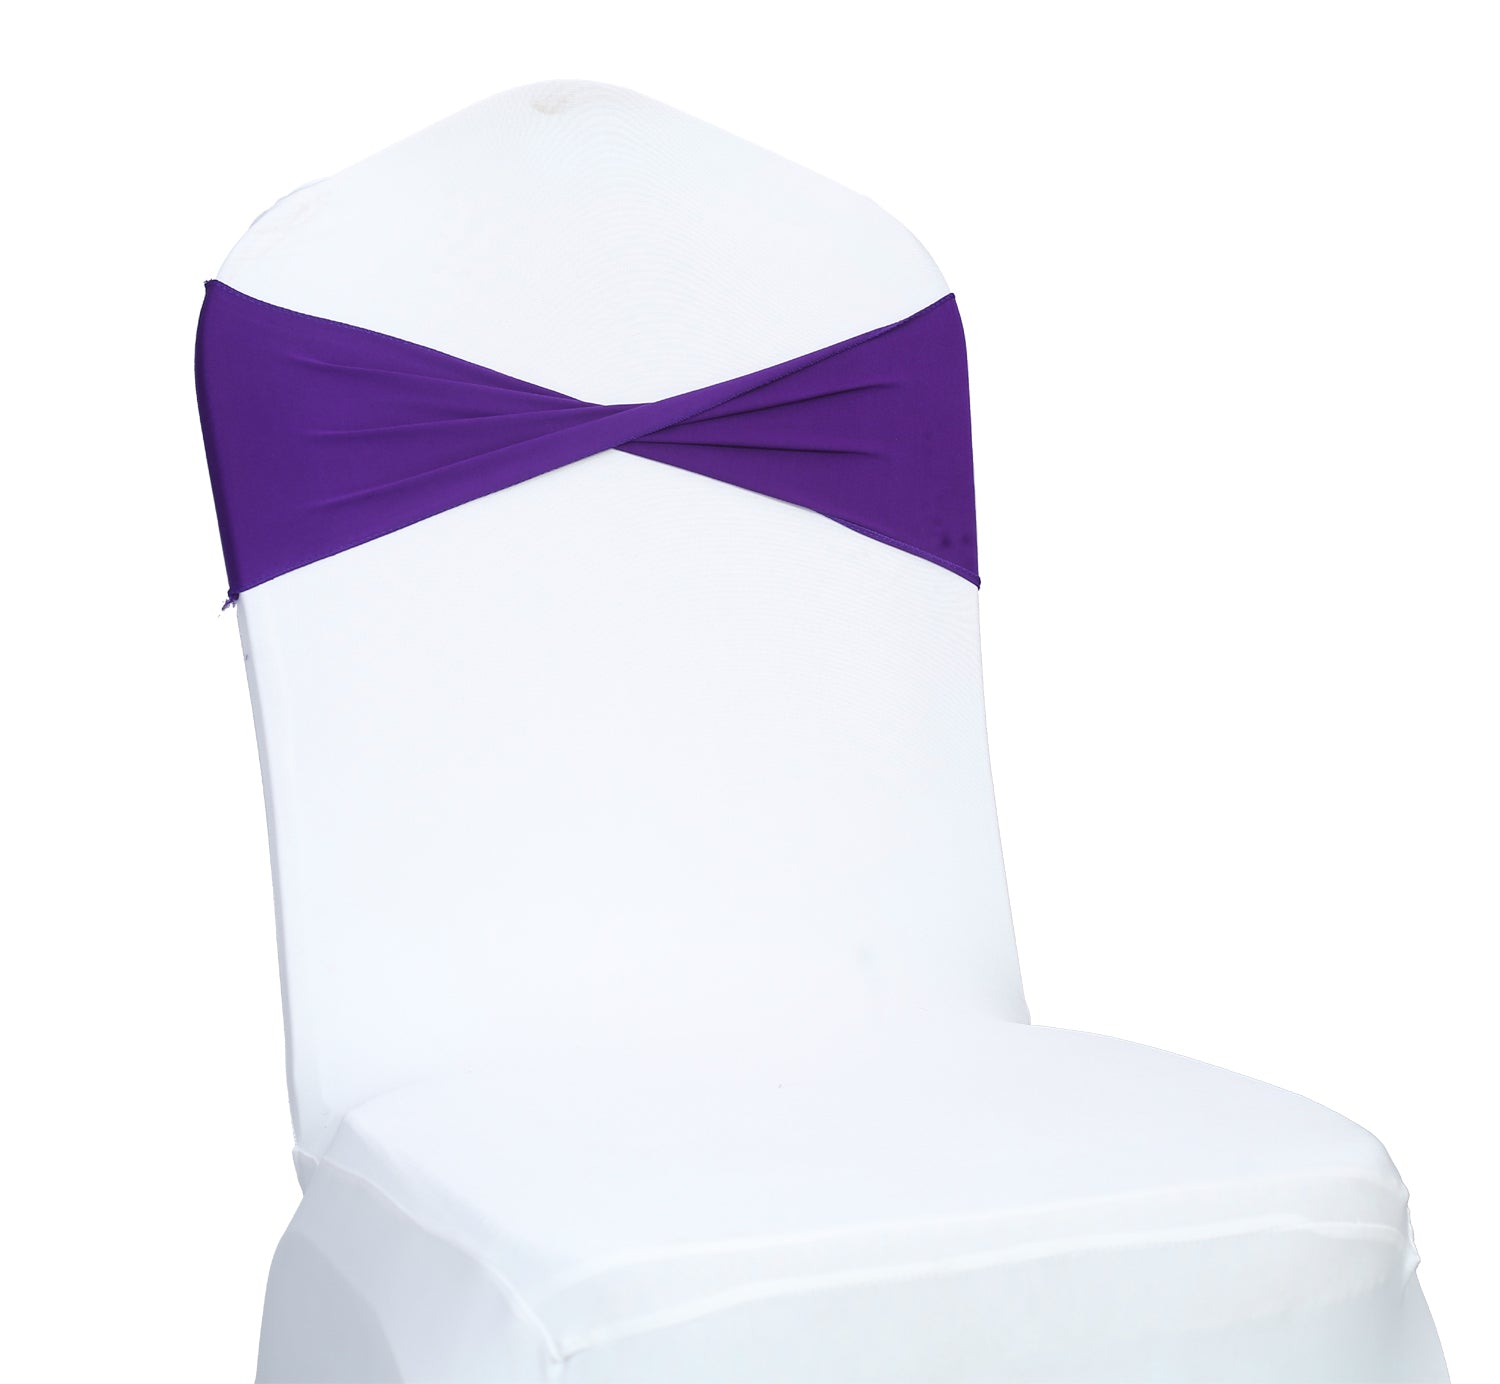 Cadbury Purple,95ea68d0-b913-45e0-ba3d-9754345d59e9